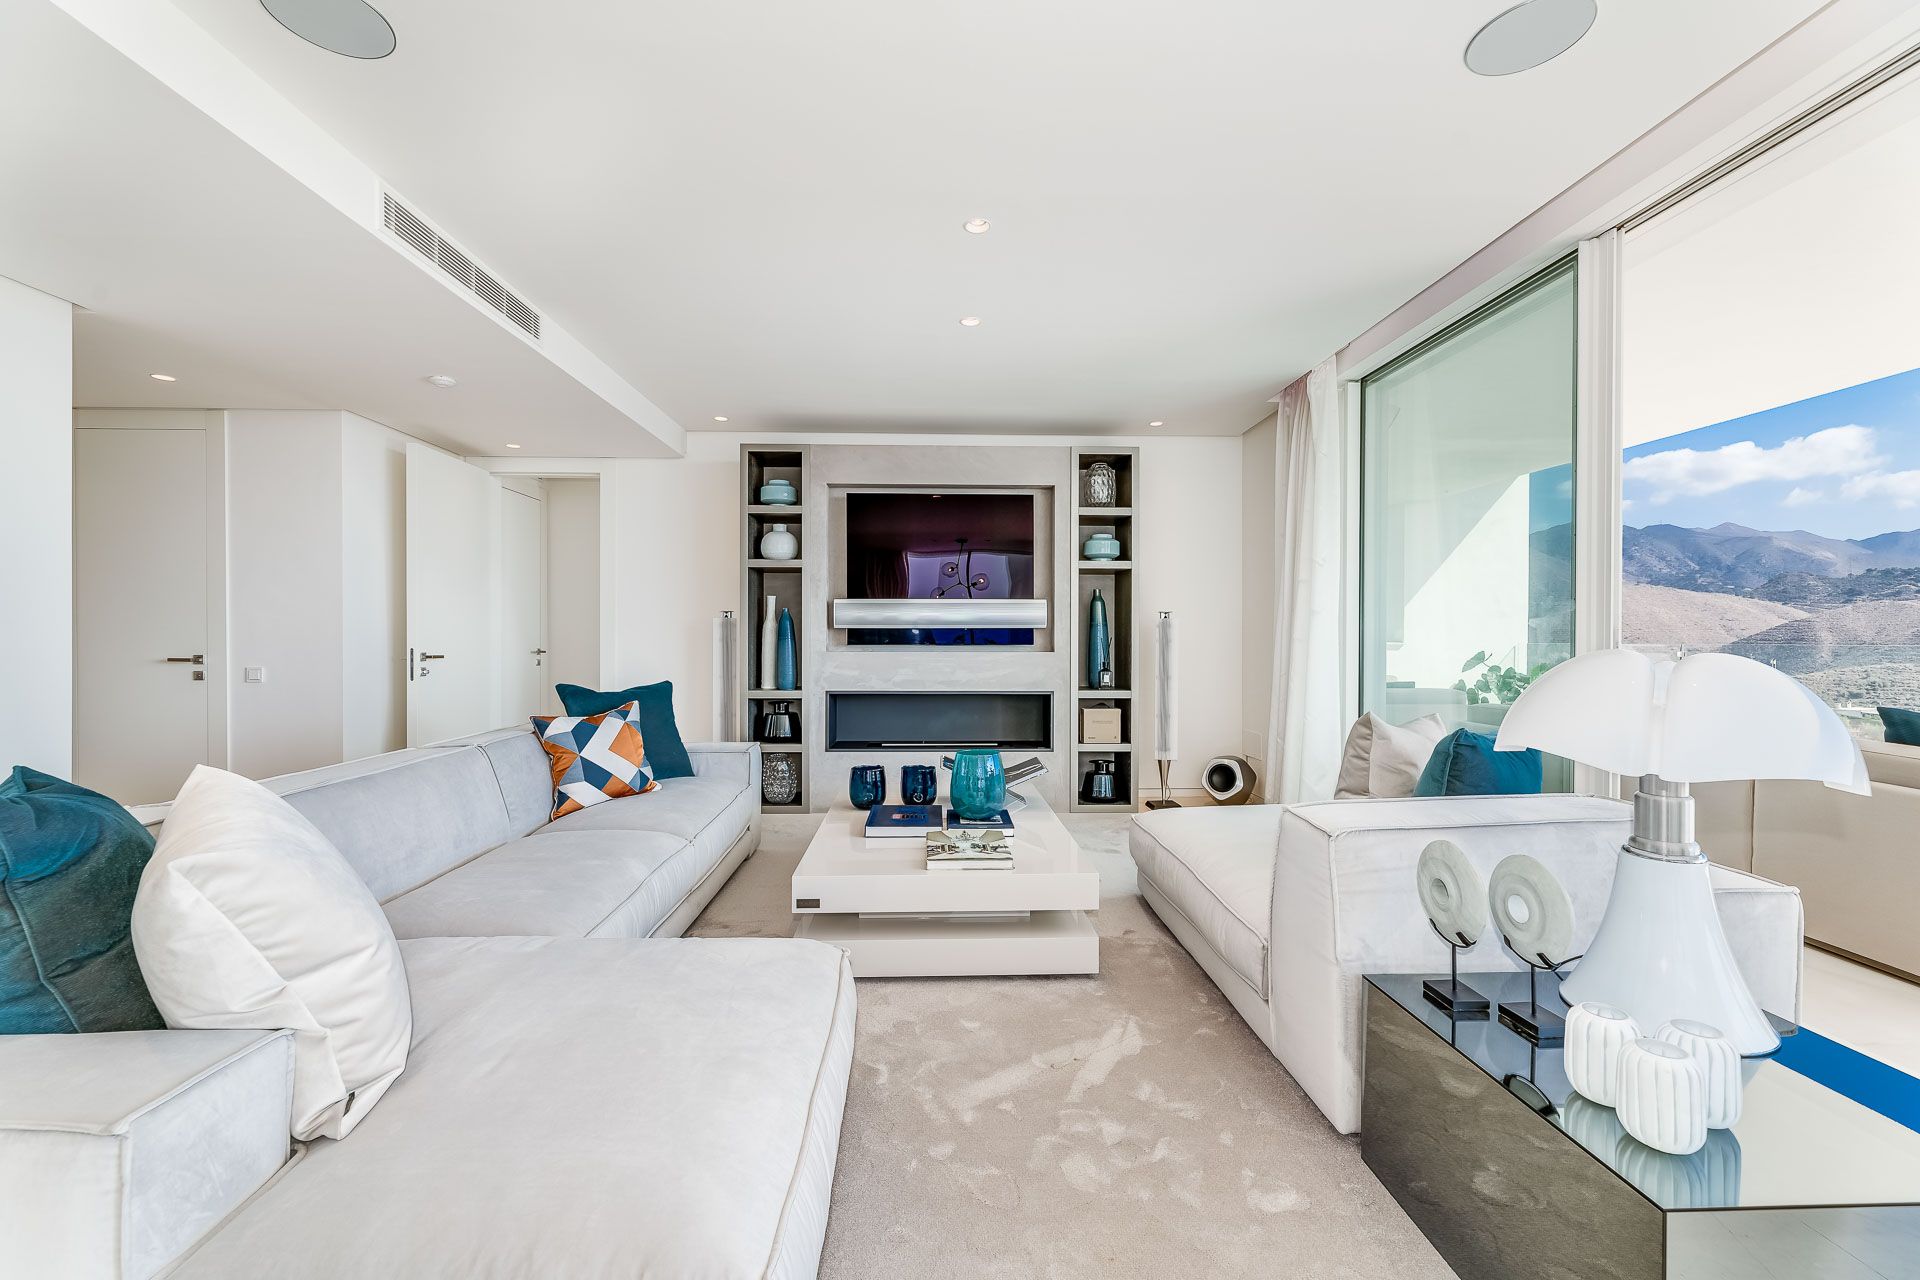 2 Bedroom contemporary luxury apartment with panoramic views | Engel & Völkers Marbella